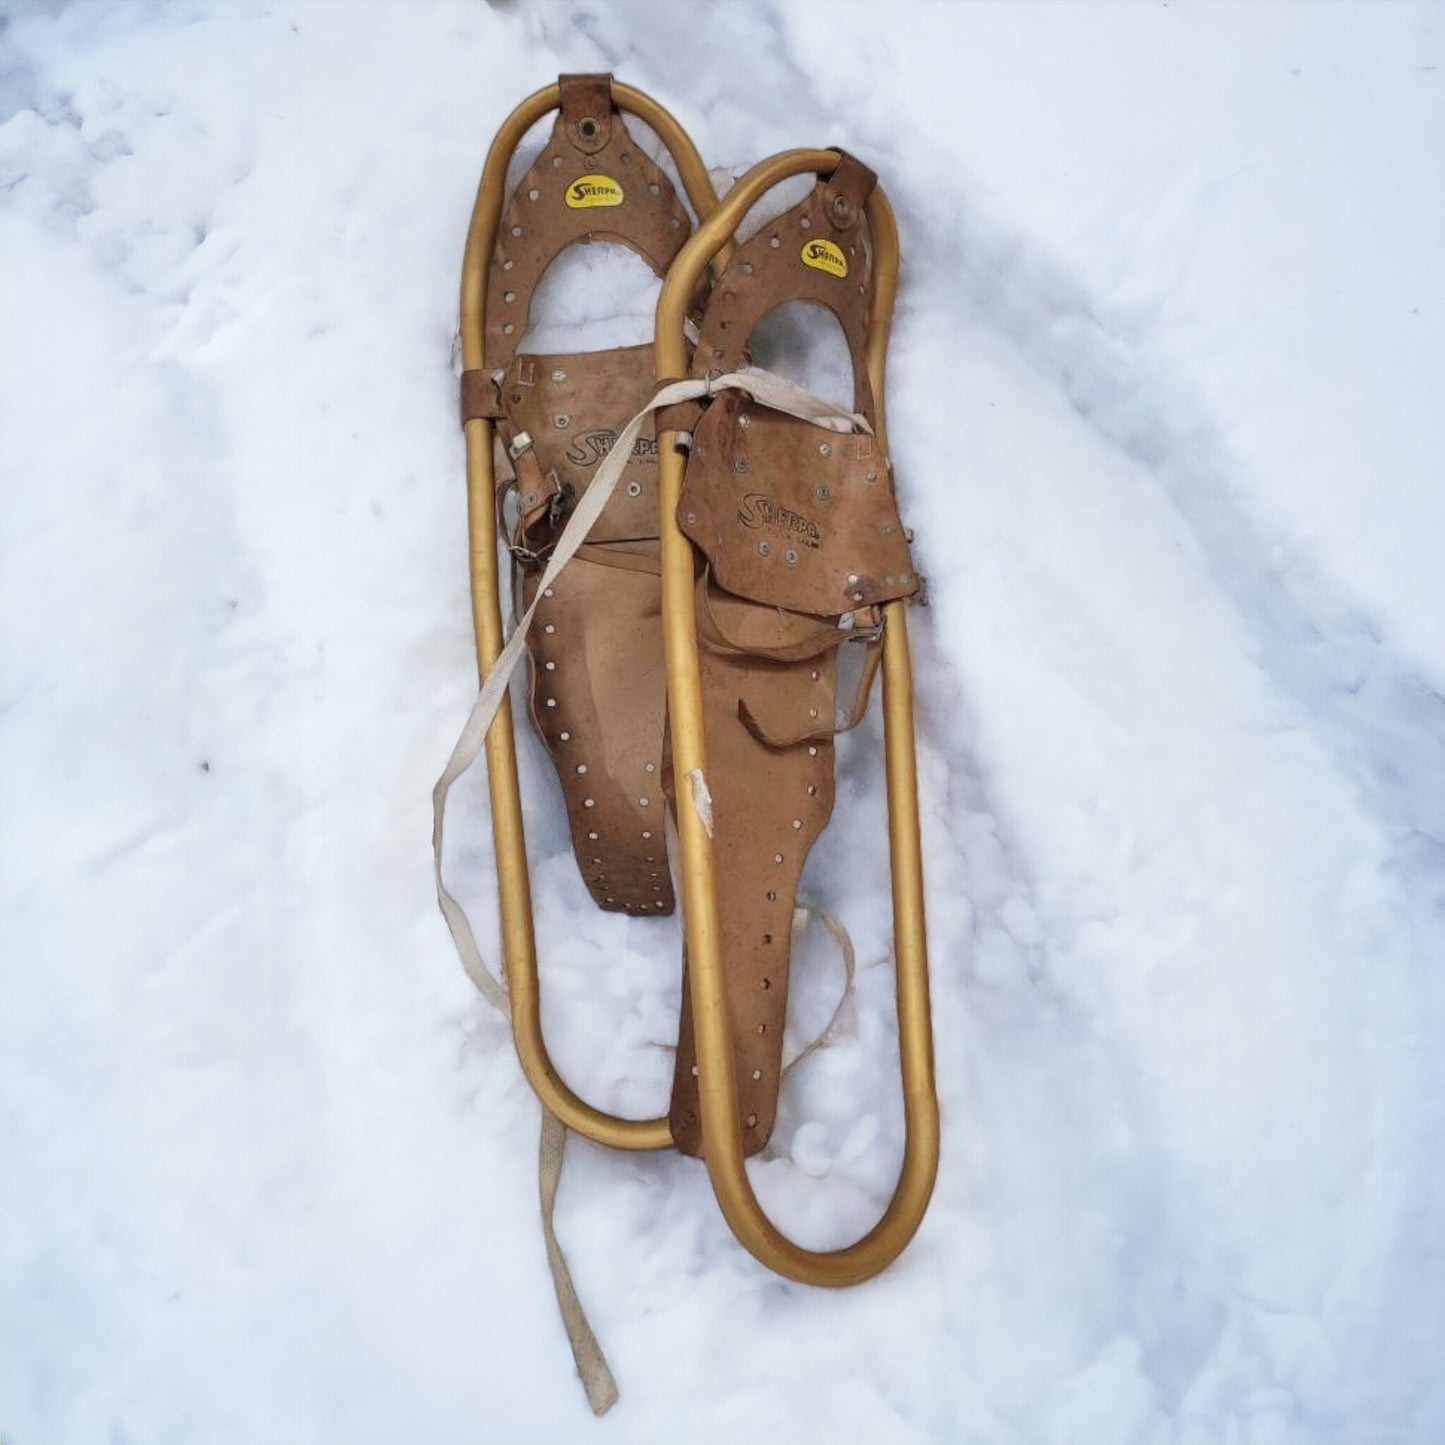 Vintage Snowshoes Pair of Sherpa Brand